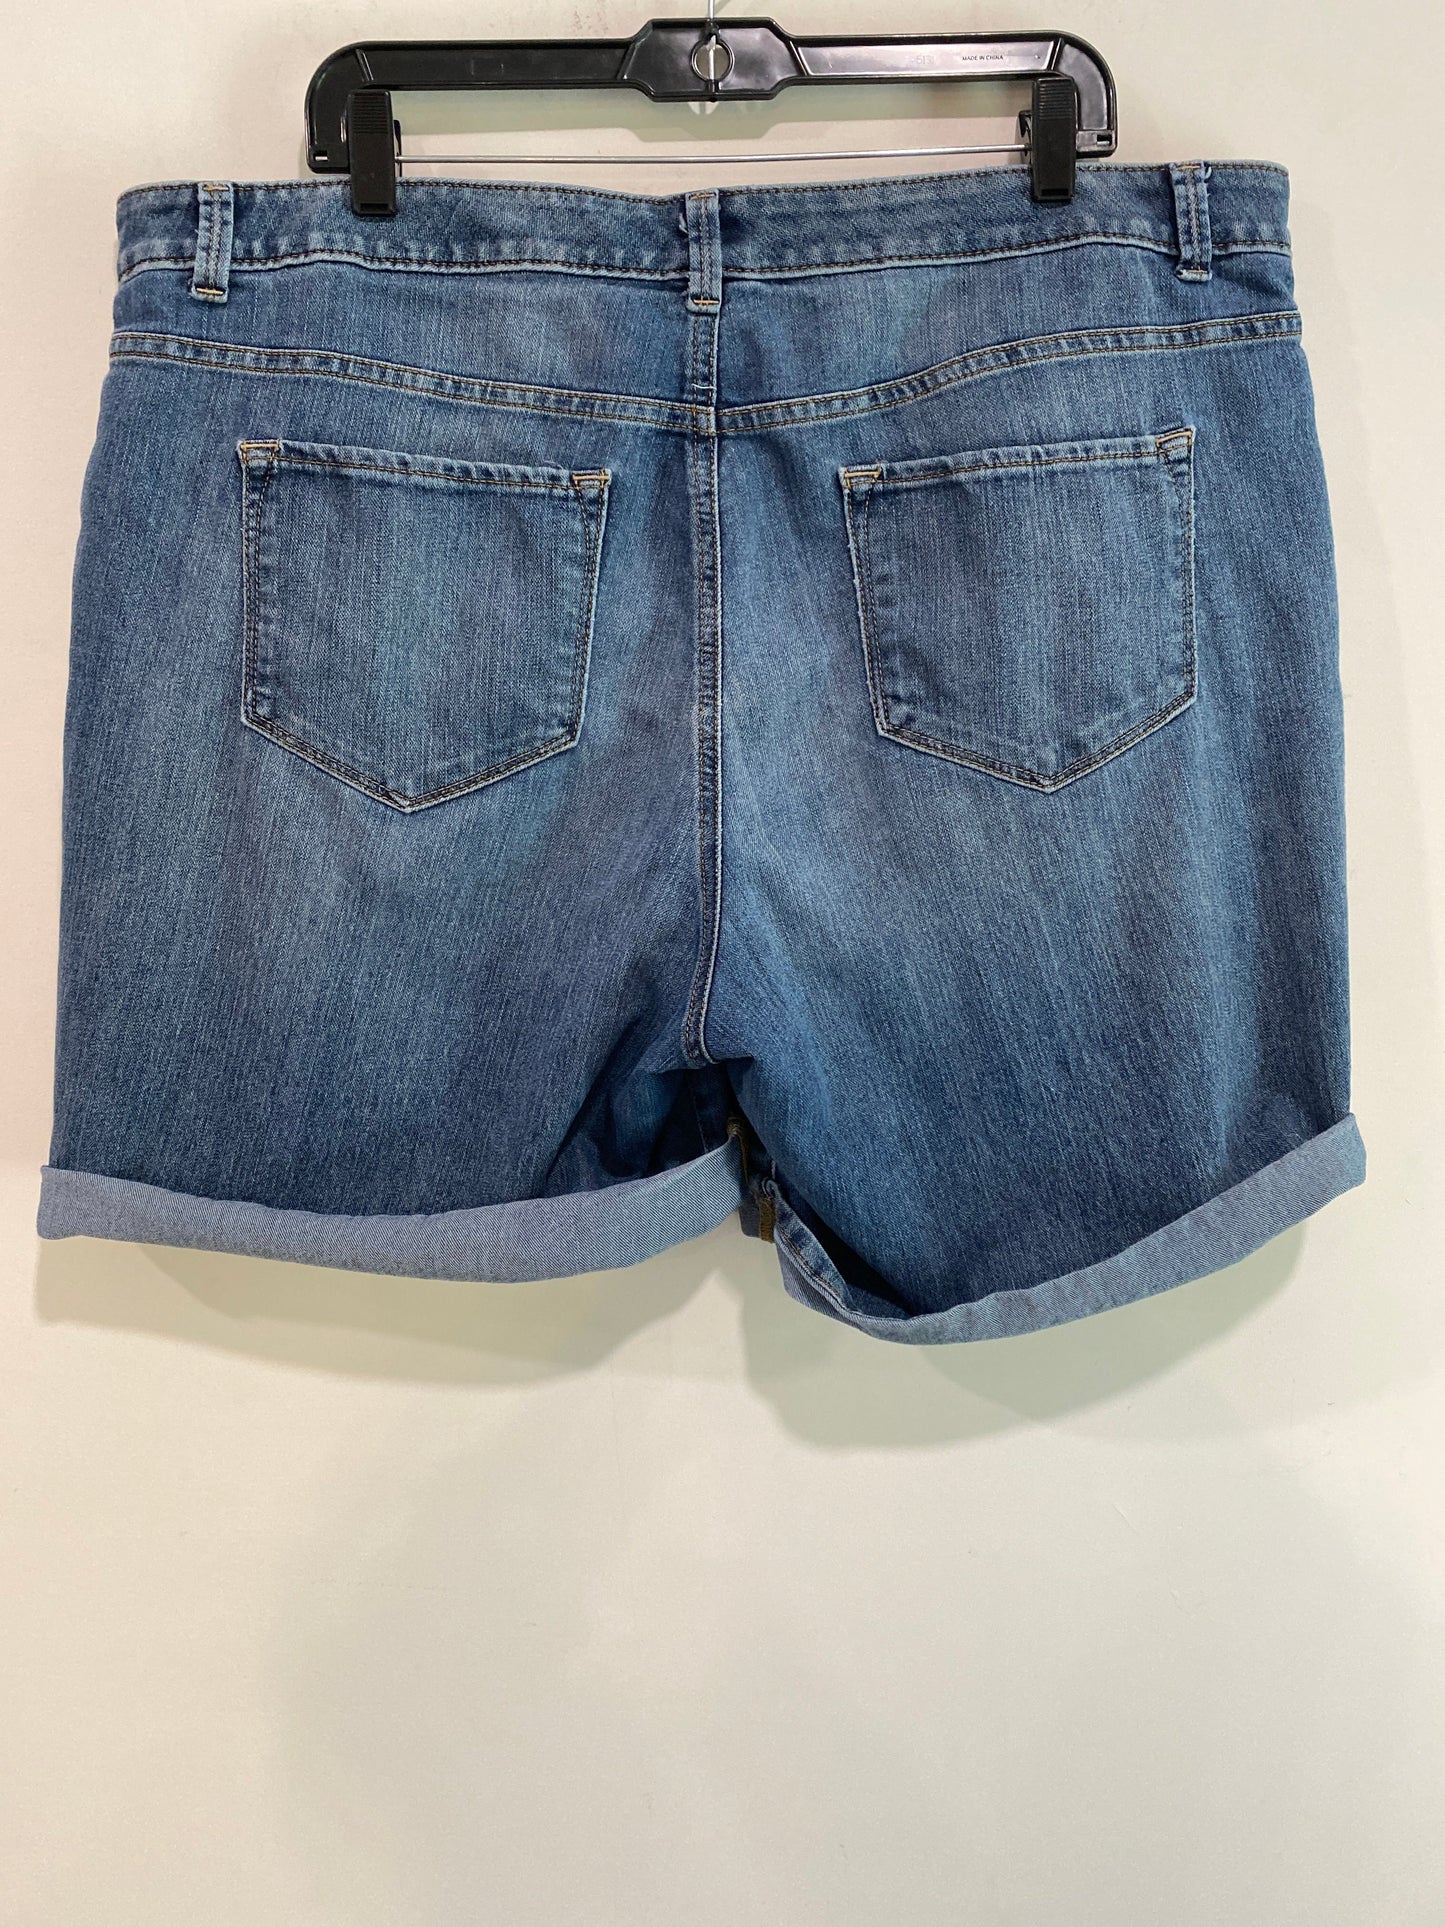 Blue Denim Shorts Sonoma, Size 18